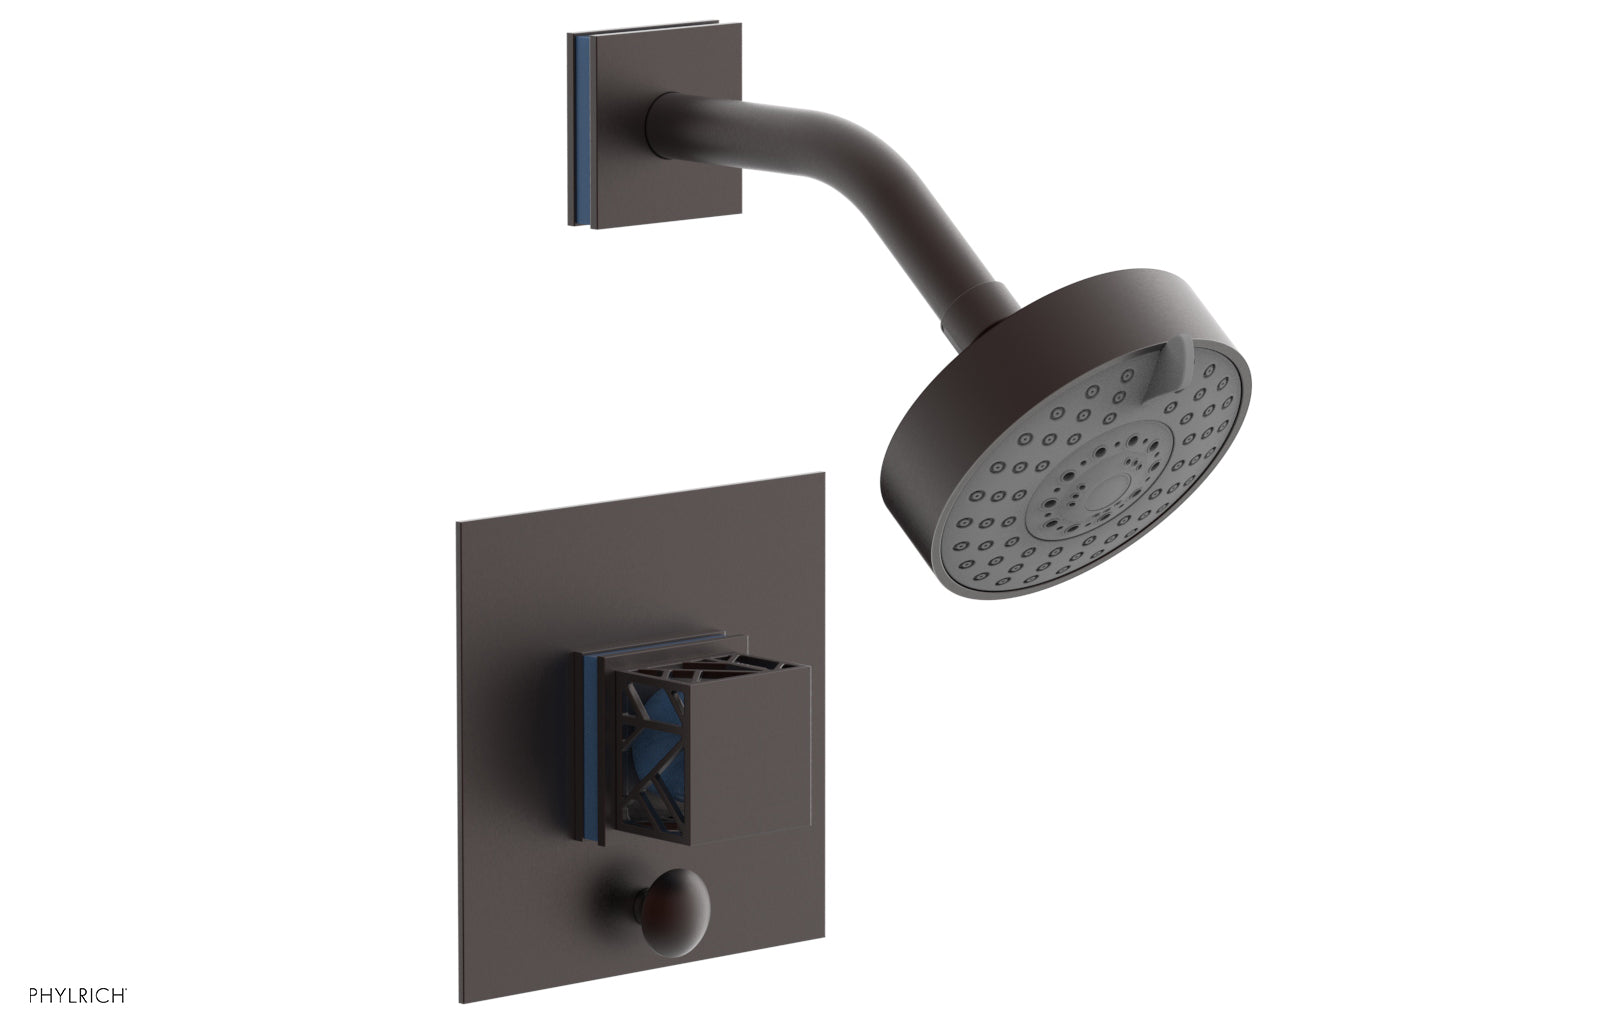 Phylrich JOLIE Pressure Balance Shower and Diverter Set (Less Spout), Square Handle with "Light Blue" Accents